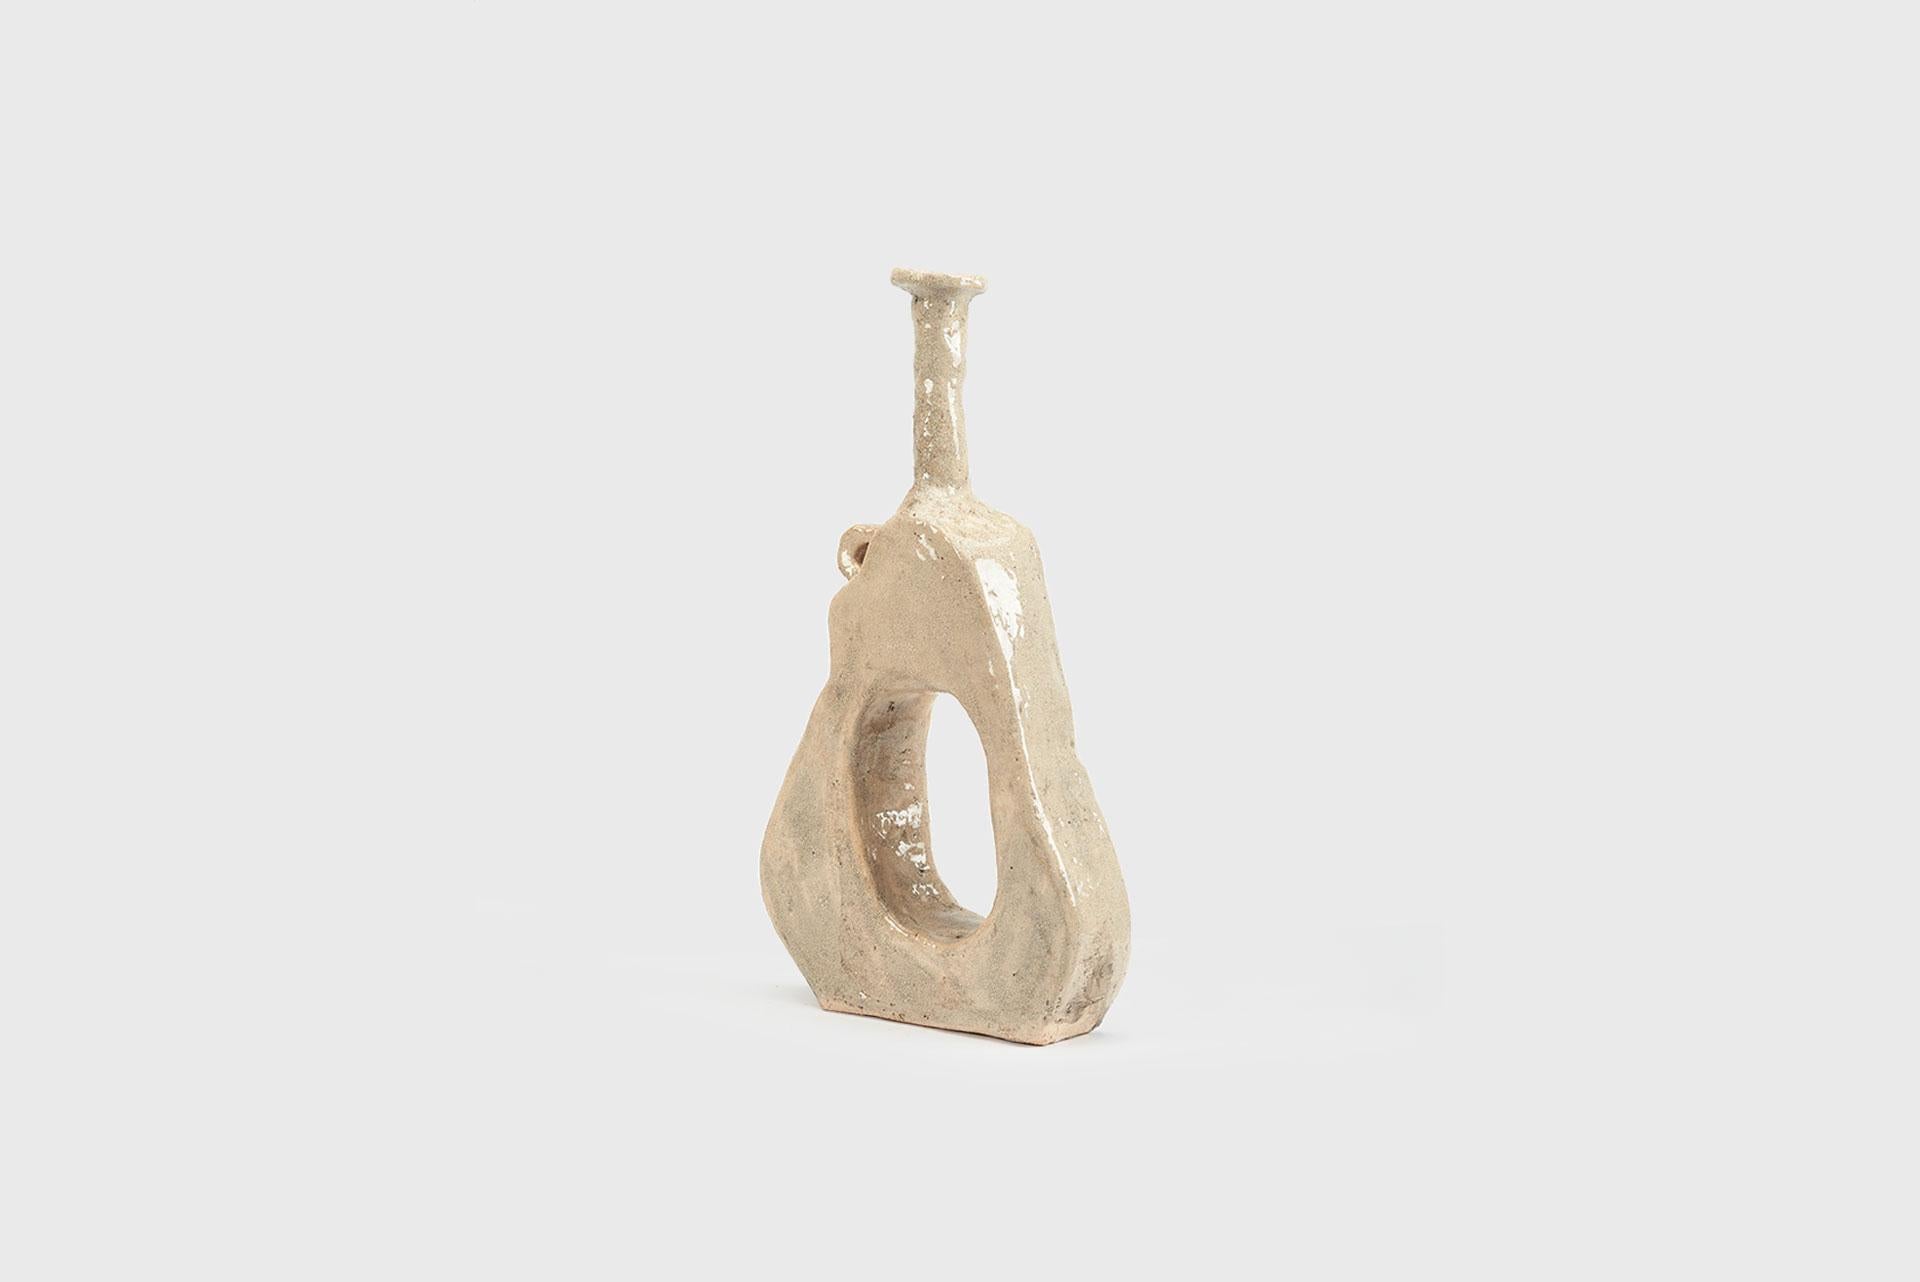 Ceramic vase model “Umo”.
From the series 